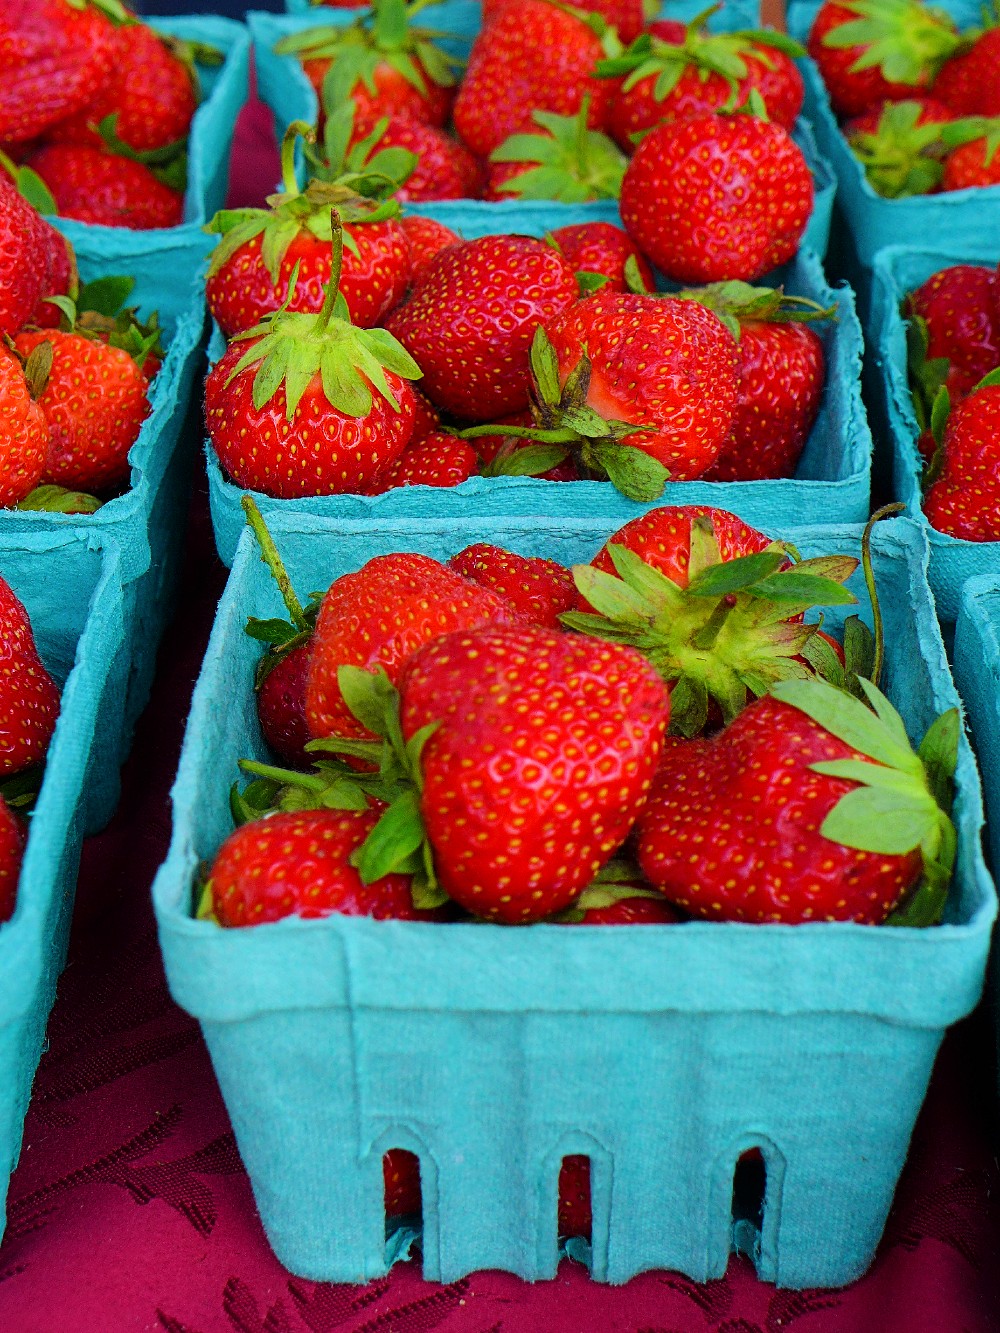 Strawberries from Fairmount Farm at the Walpole Farmers Market in Walpole, Massachusetts